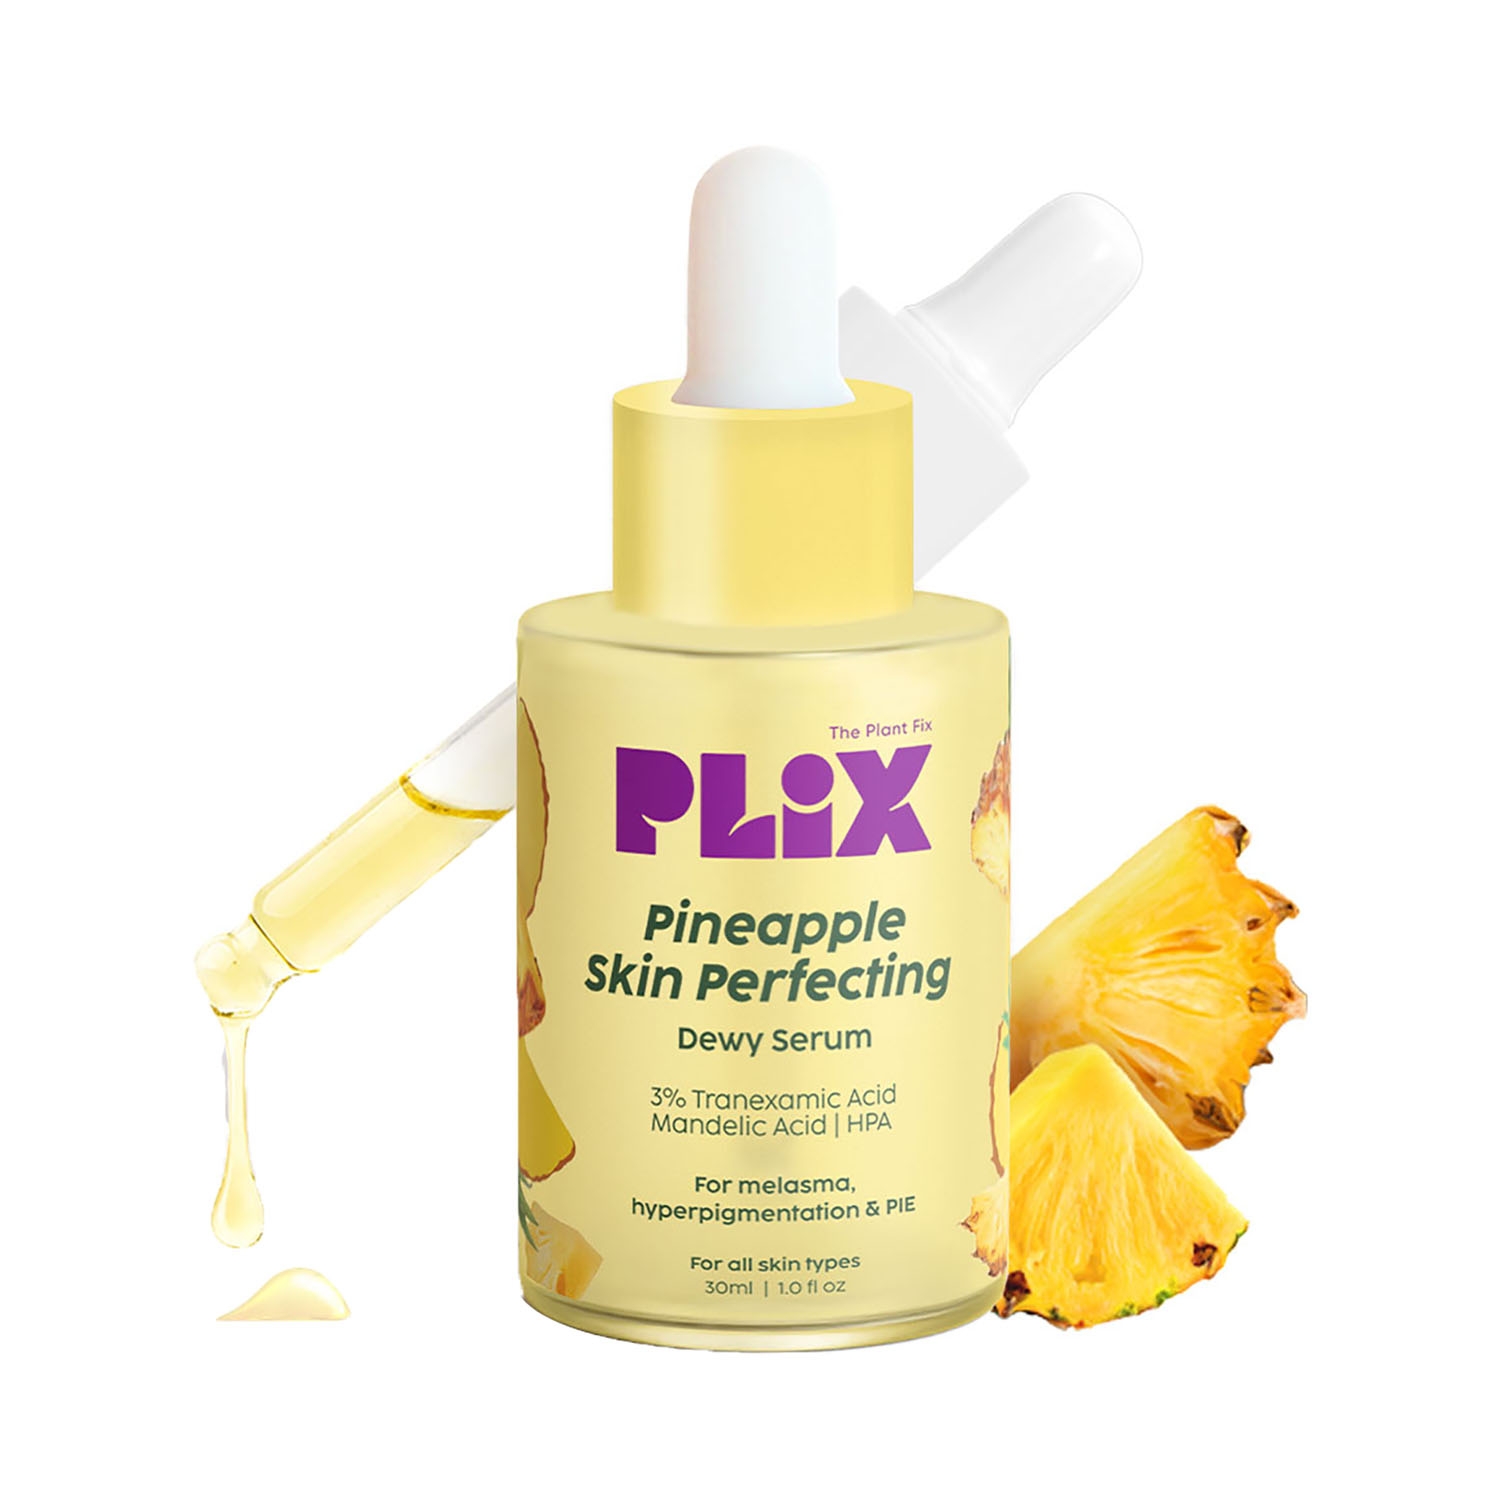 Plix The Plant Fix | Plix The Plant Fix 3% Tranexamic Acid + Mandelic Acid Pineapple Skin Perfecting Dewy Face Serum (30ml)